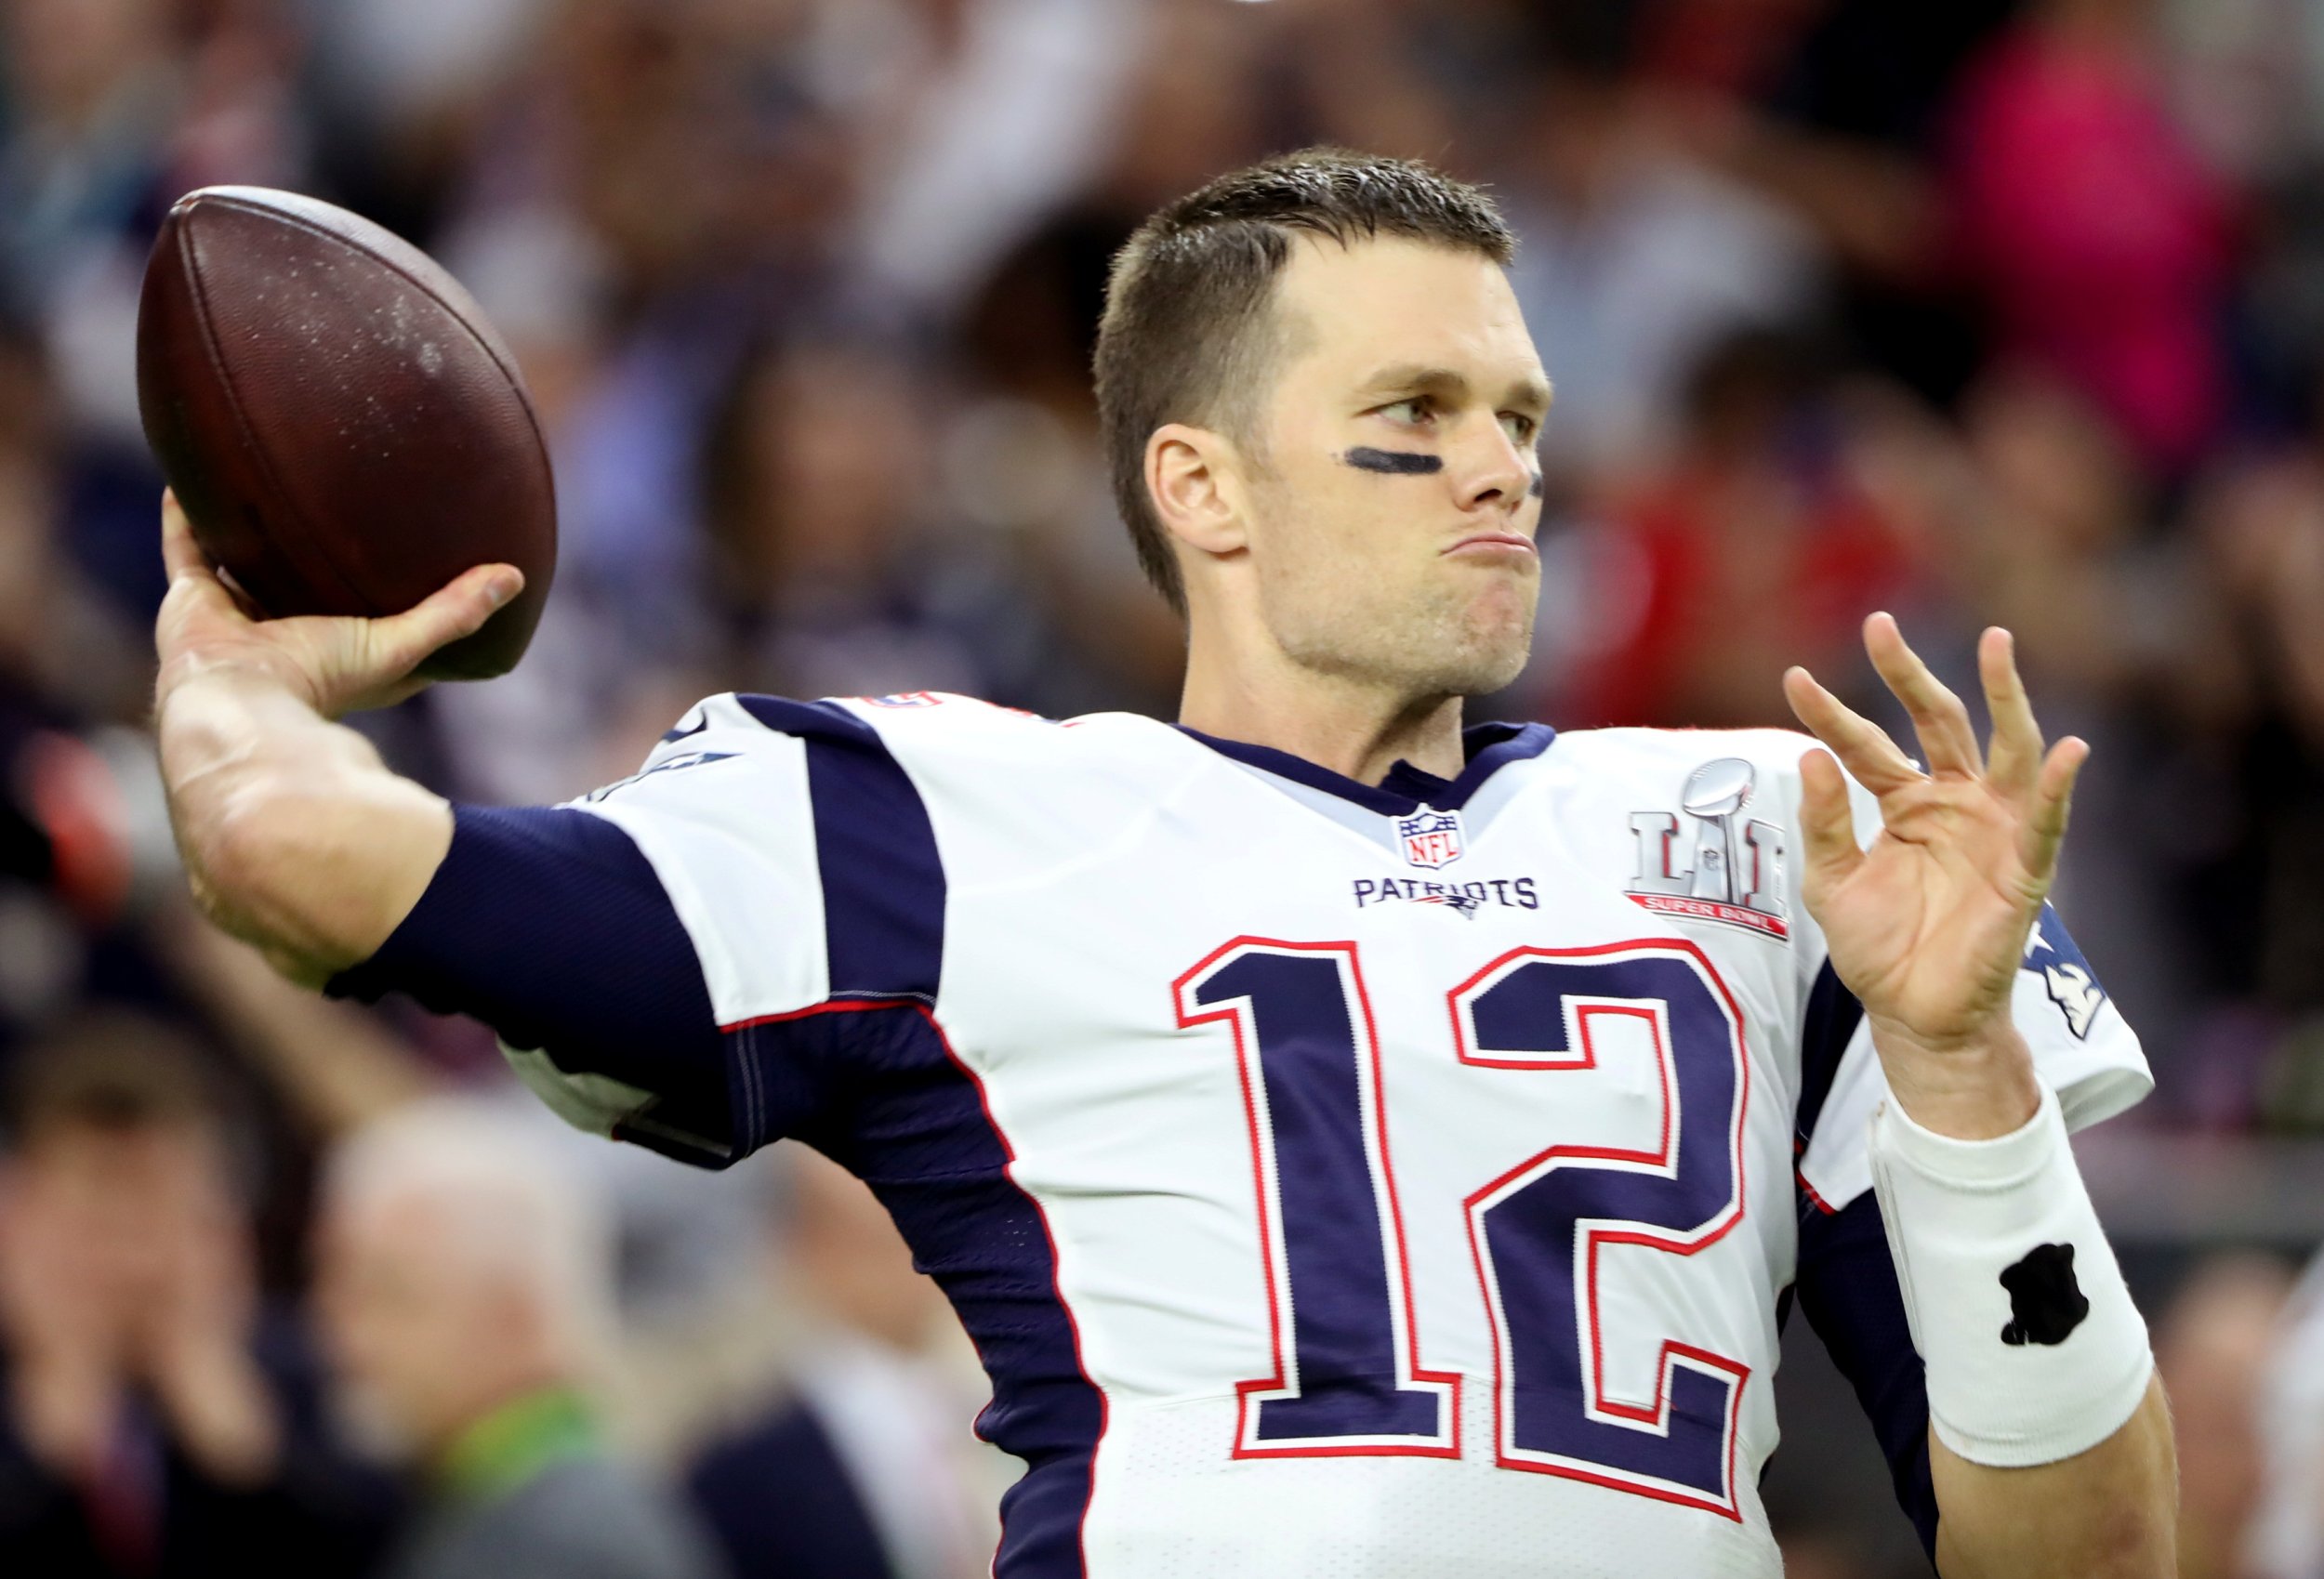 Tom Brady Elite Quarterback Until His Mid 40s Says Patriots Owner